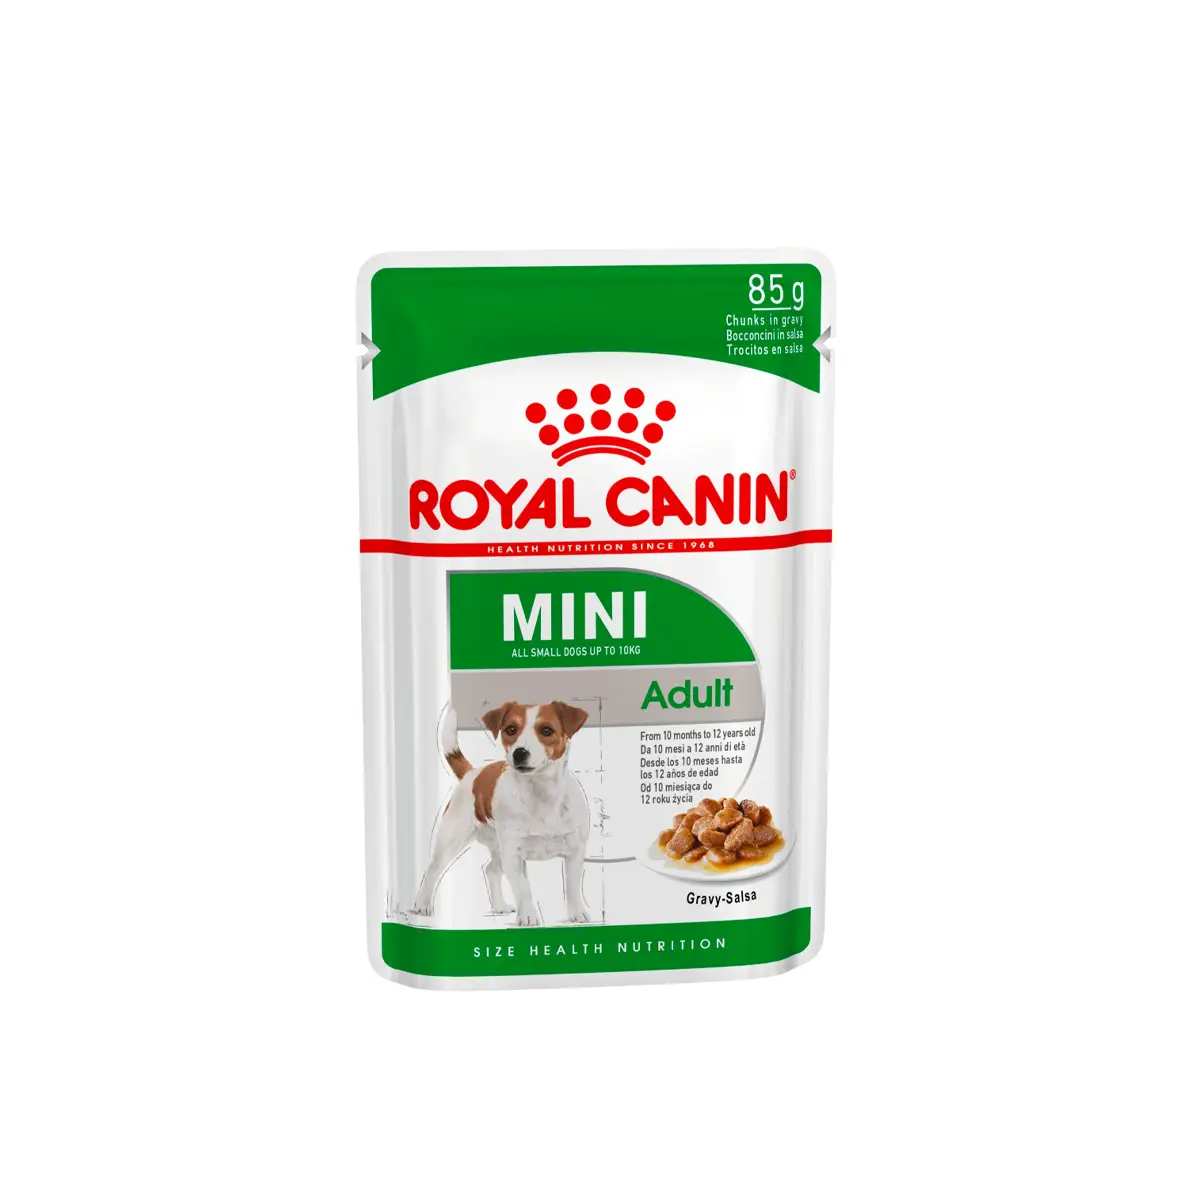 Royal Canin - Adult Mini Gravy Wet Food 85g